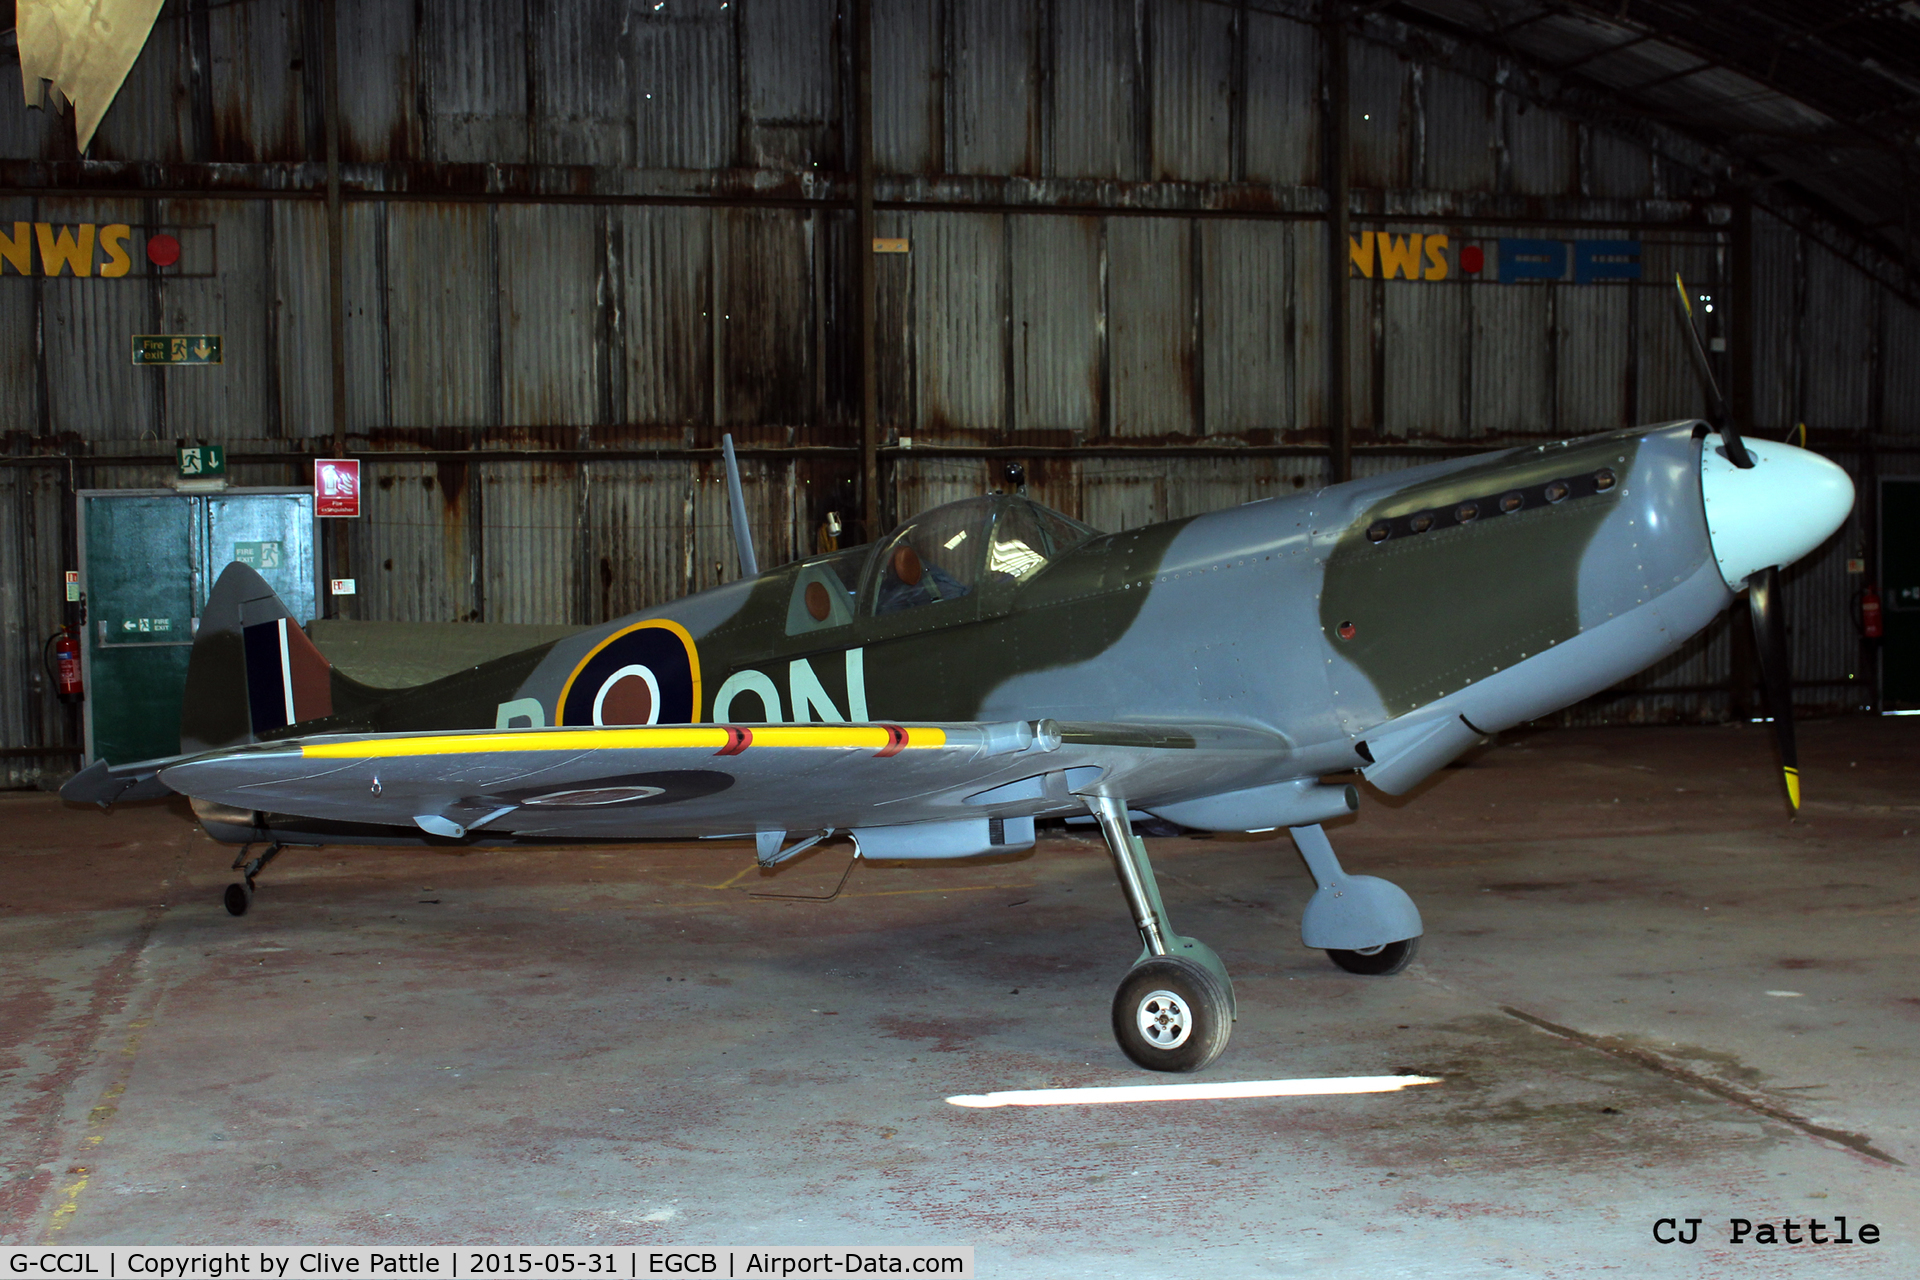 G-CCJL, 2007 Supermarine Aircraft Spitfire Mk.26 C/N PFA 324-14053, Hangared at Barton Airfield, Manchester - EGCB